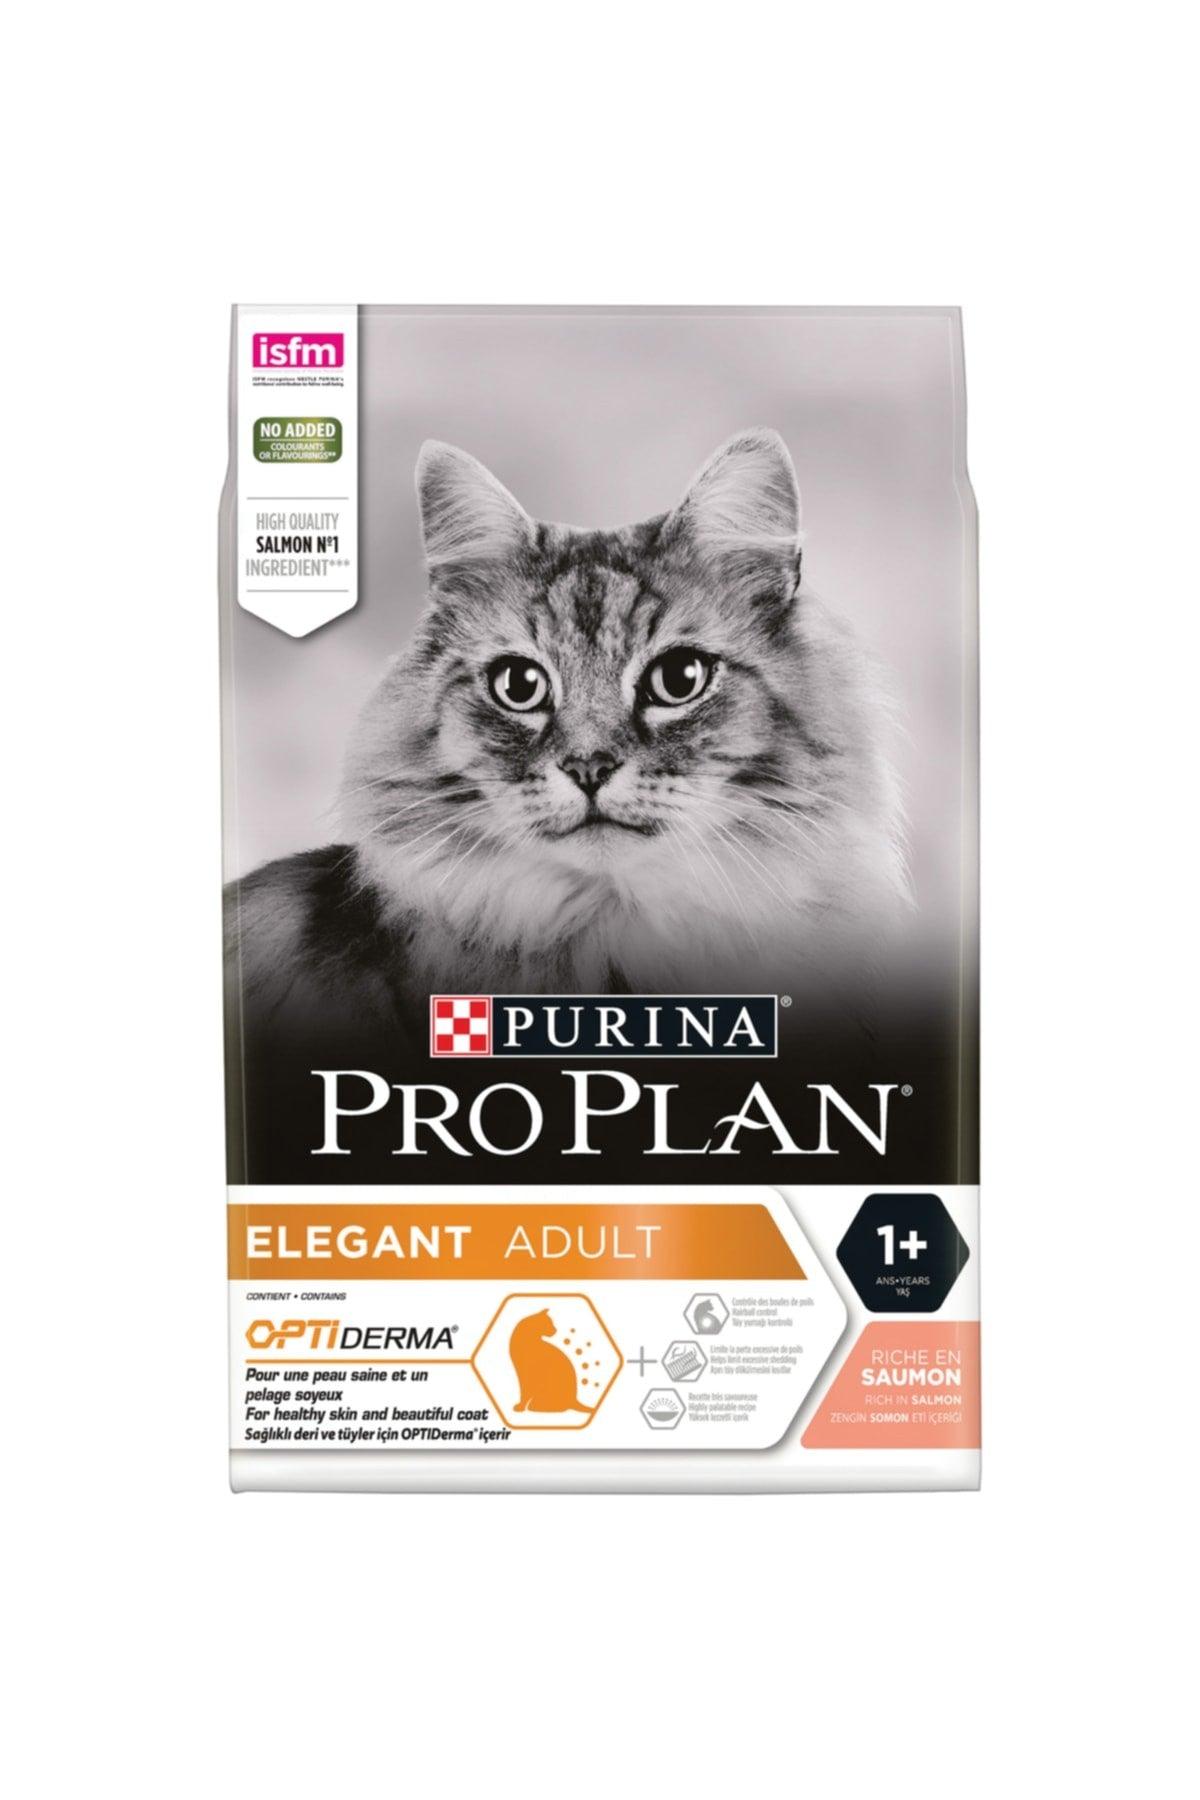 Pro Plan Elegant Adult Cat Food with Salmon